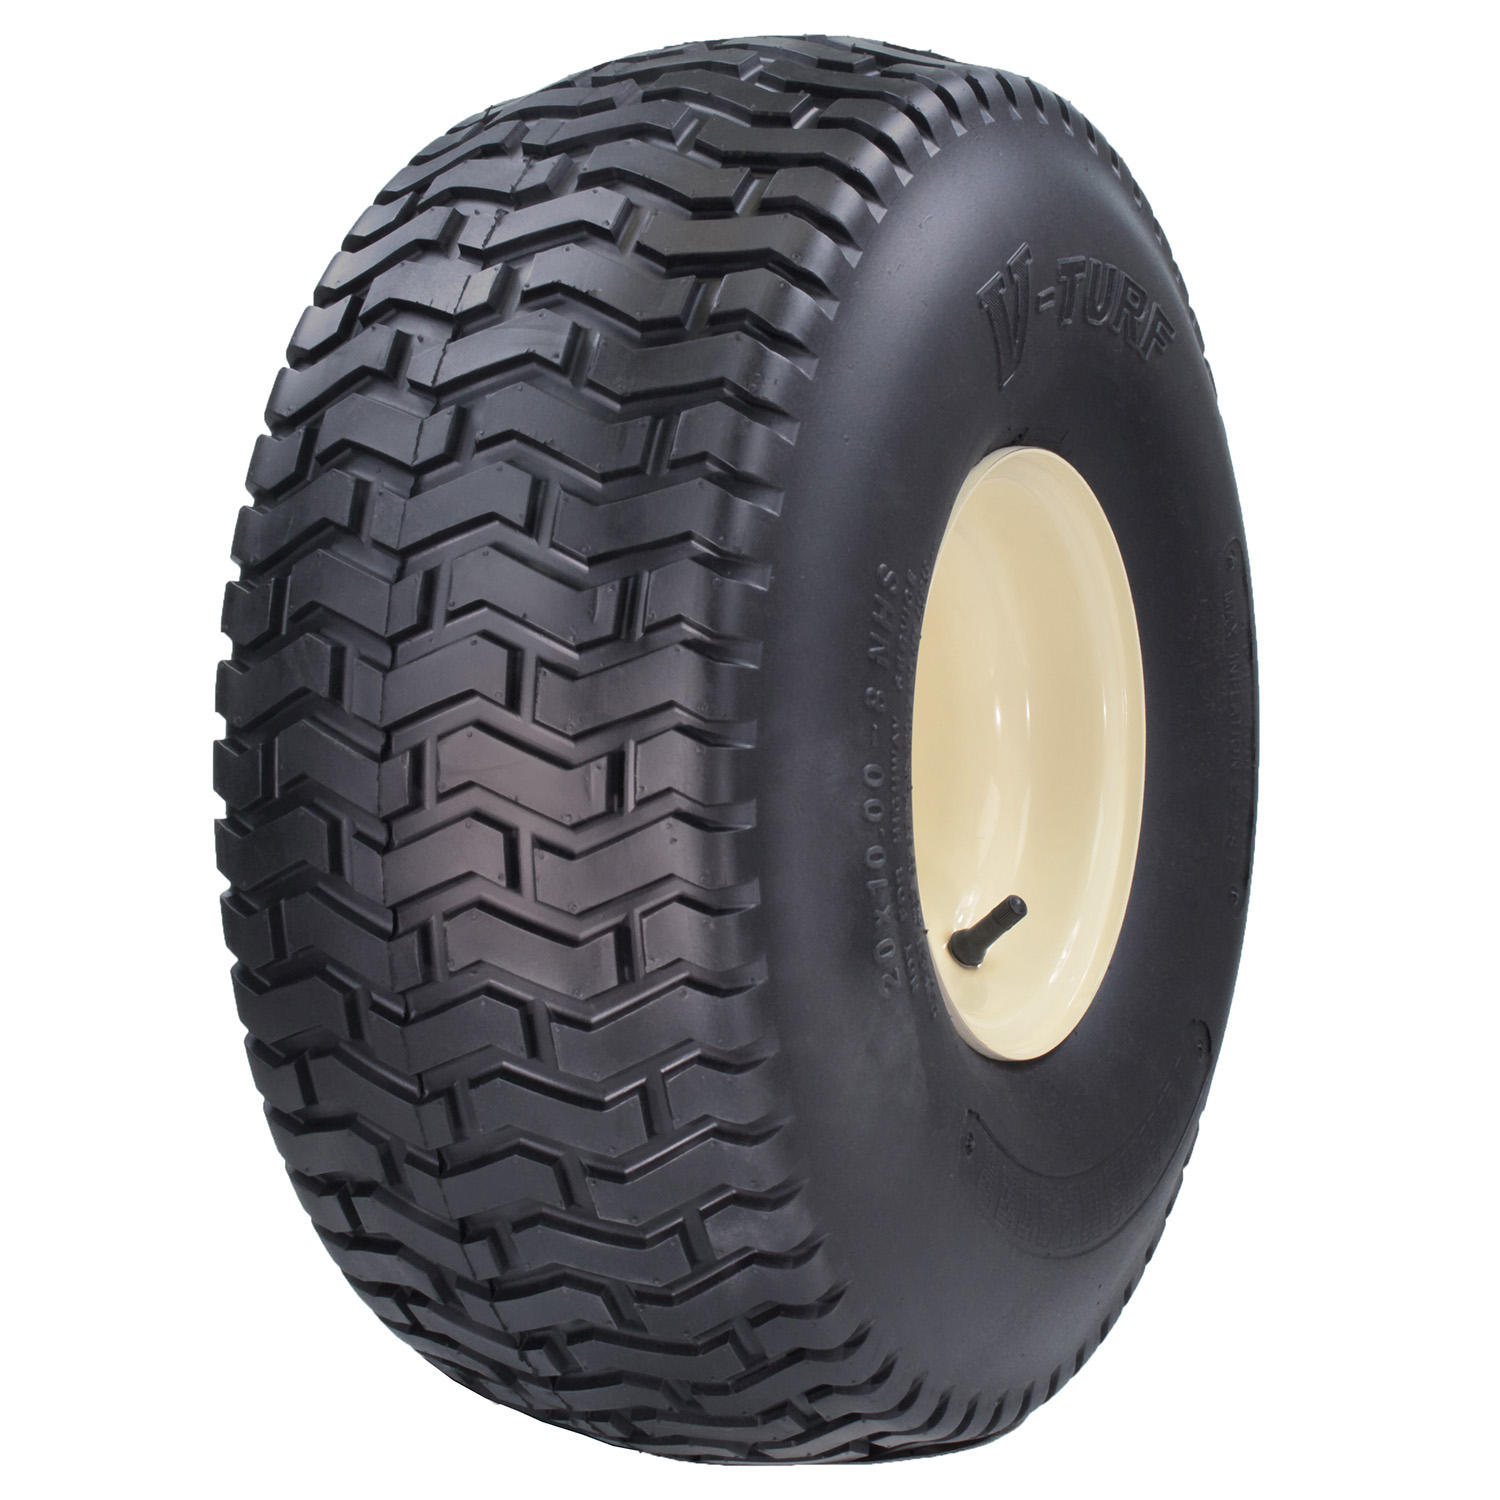 Greenball Soft Turf - 16X6.50-8 Lawn & Garden Tire